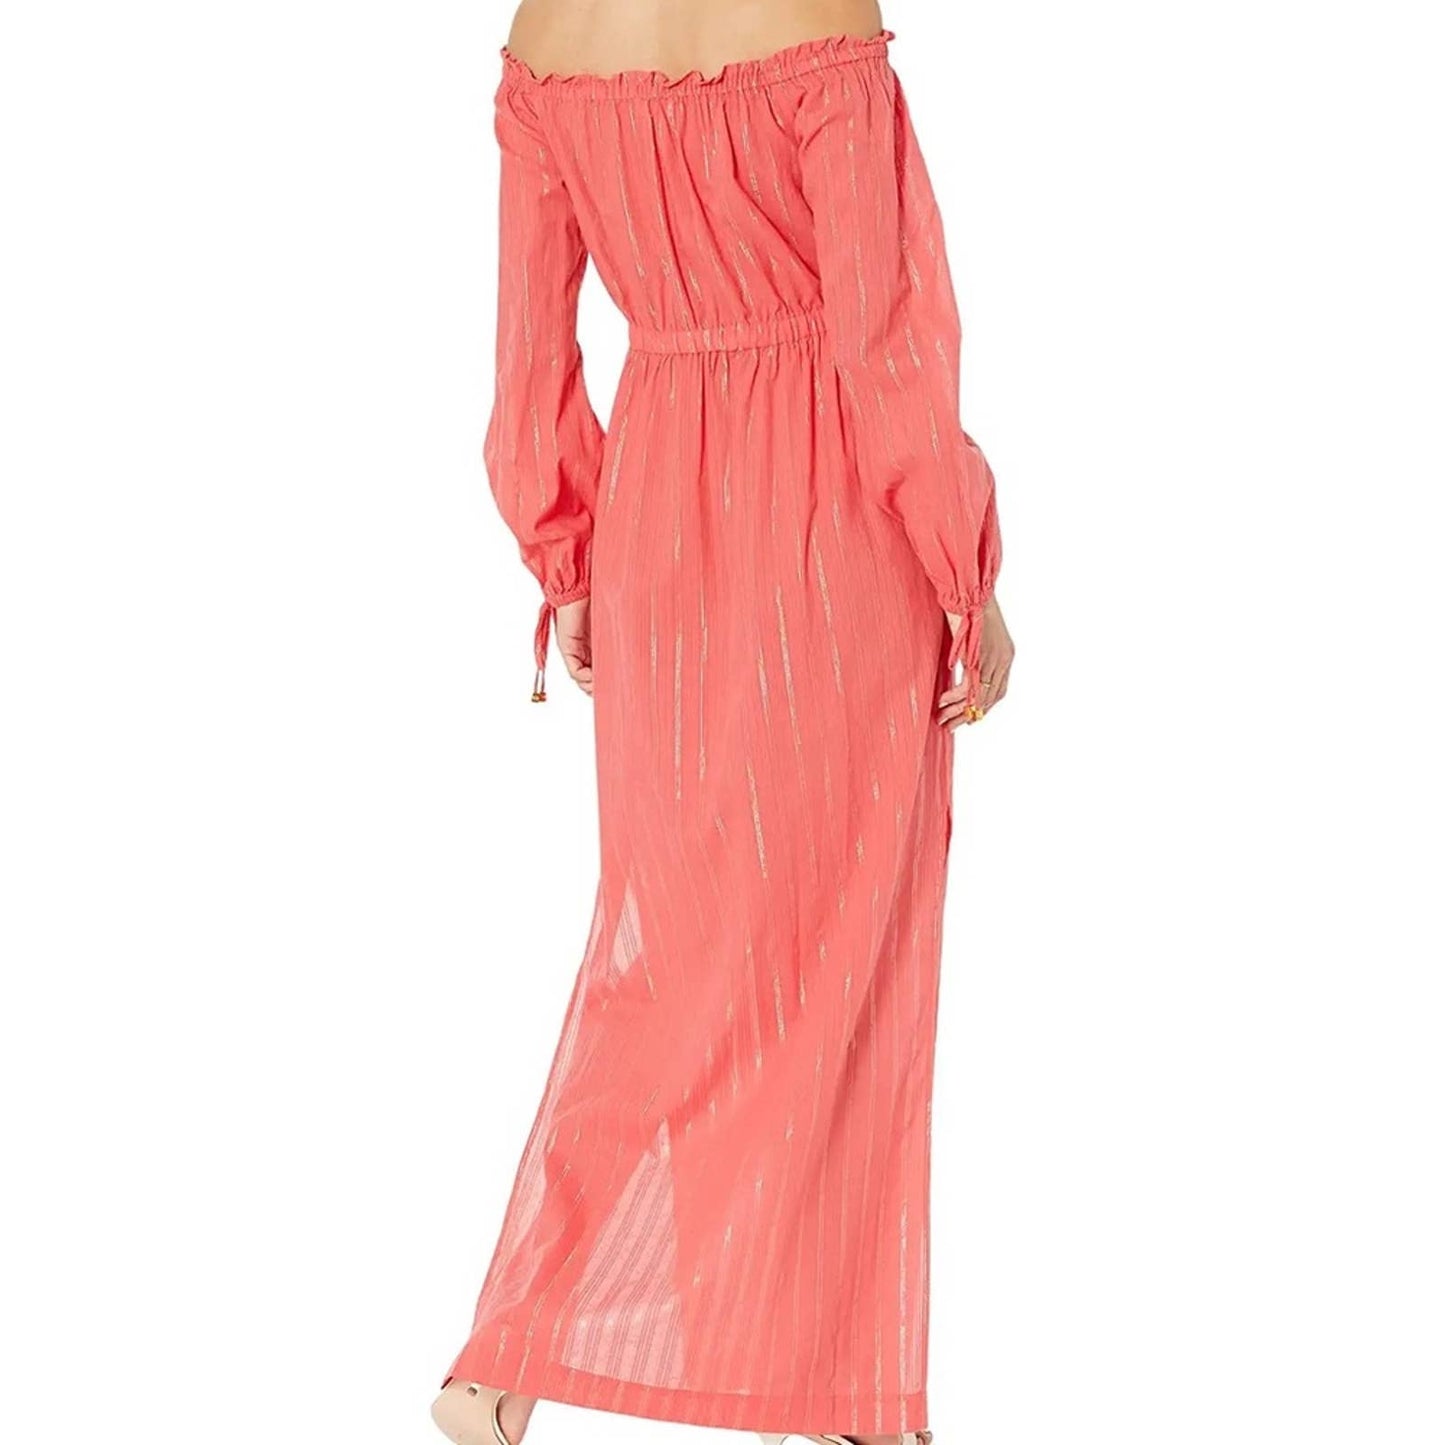 Michael Kors Sangria Pink Panel Dress w/ Gold Glitter Accents, Off-the-Shoulder!